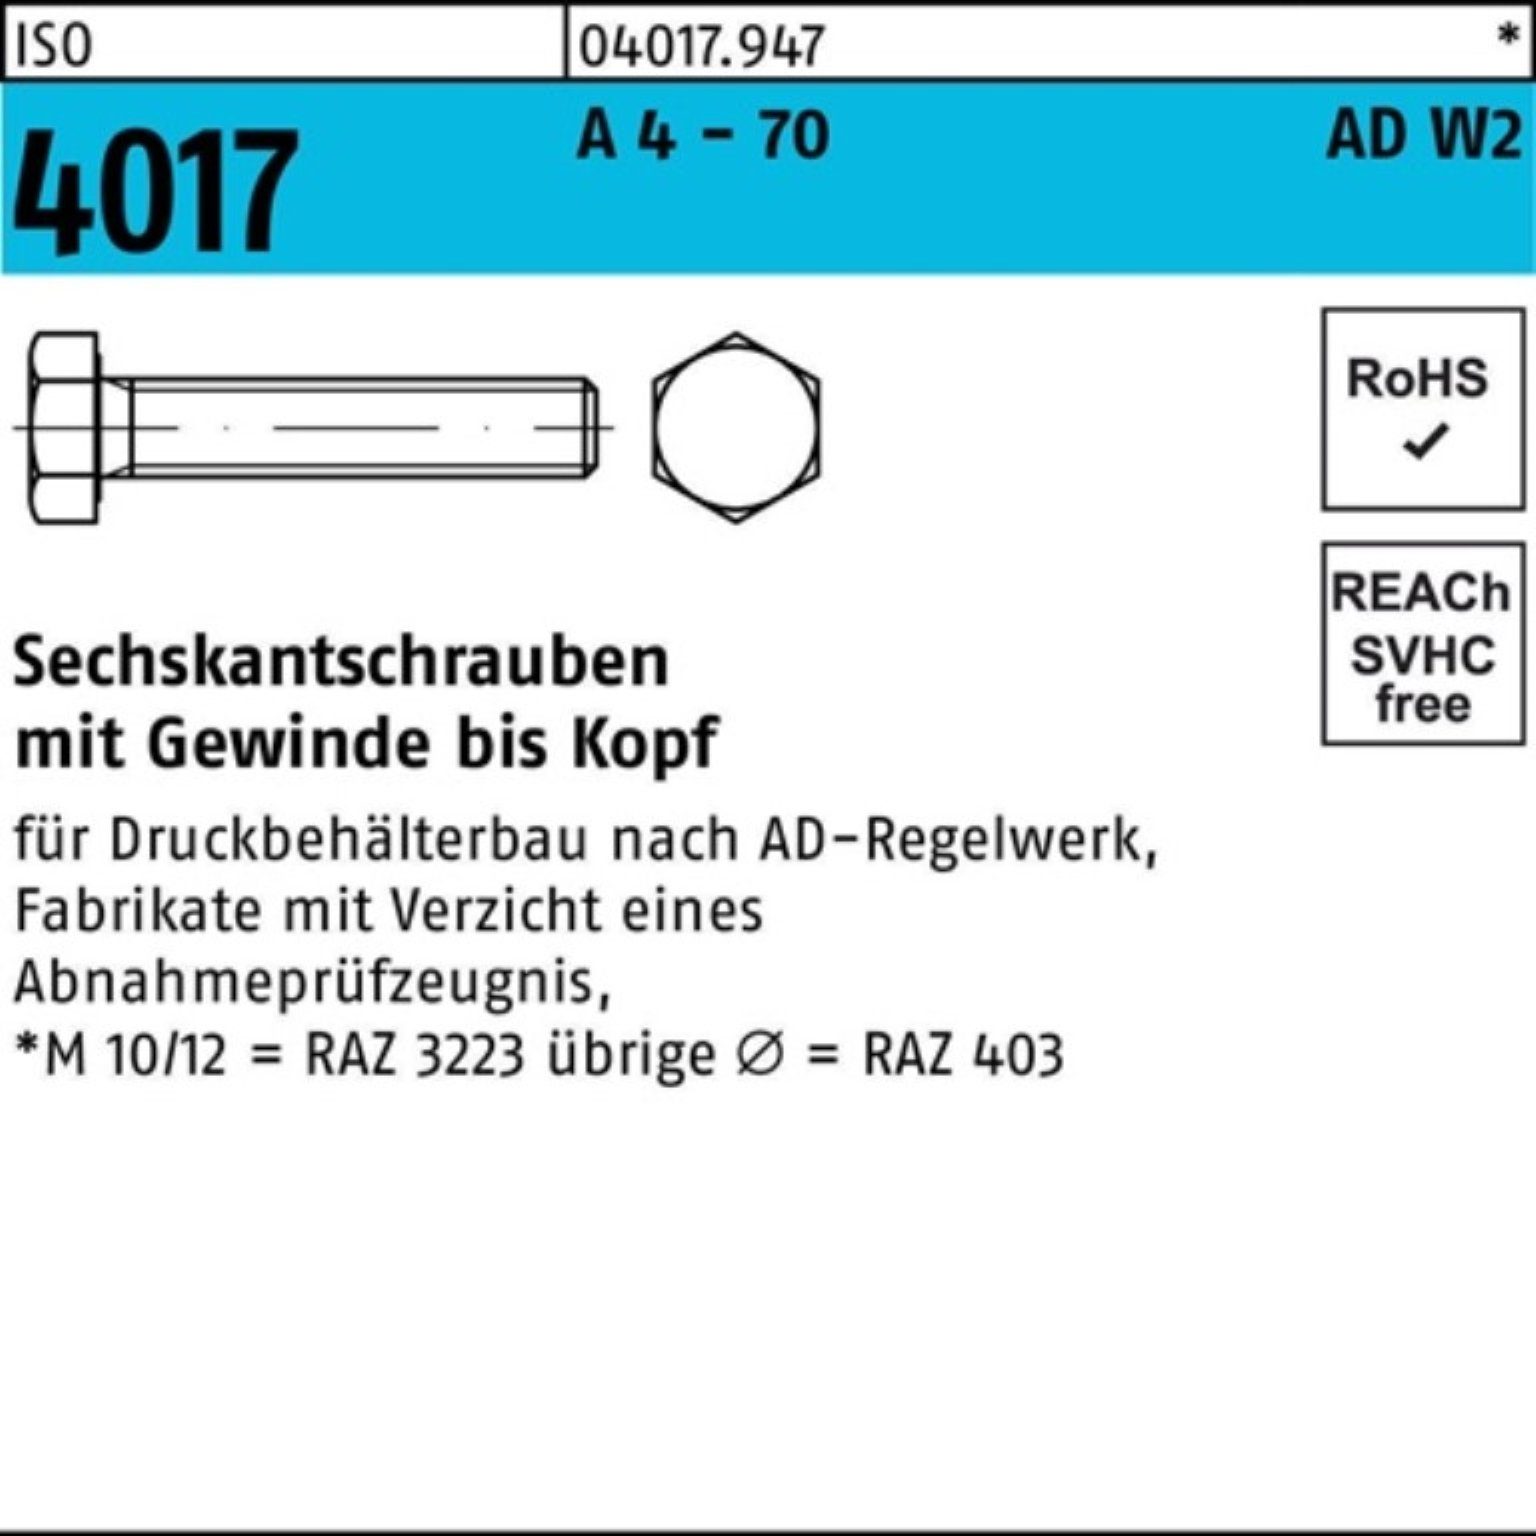 4 - VG Sechskantschraube 110 AD-W2 ISO A 70 St 4017 Pack M24x Bufab 1 100er Sechskantschraube